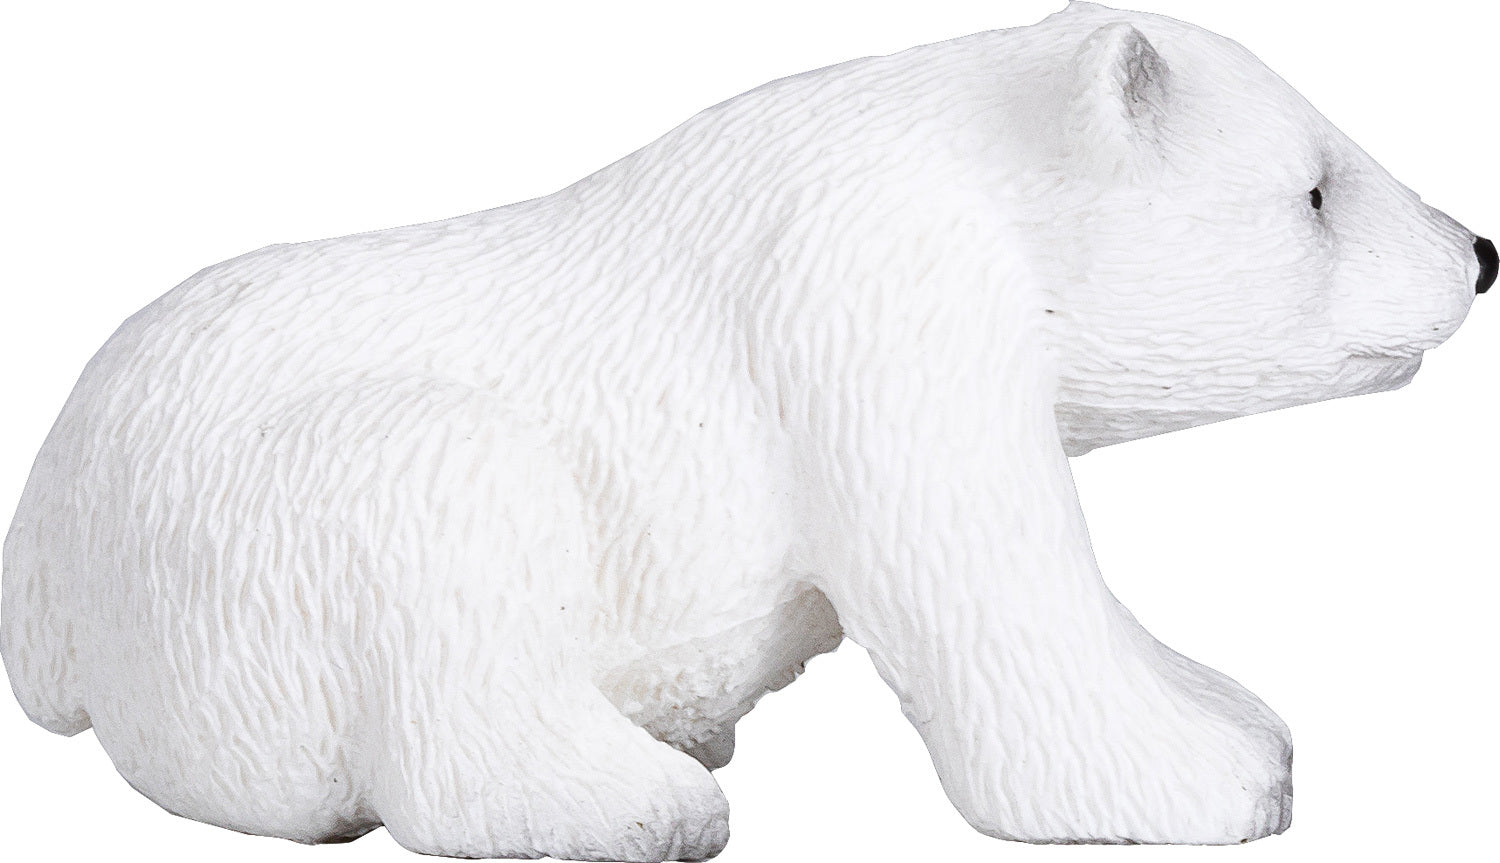 Polar bear cub Sitting